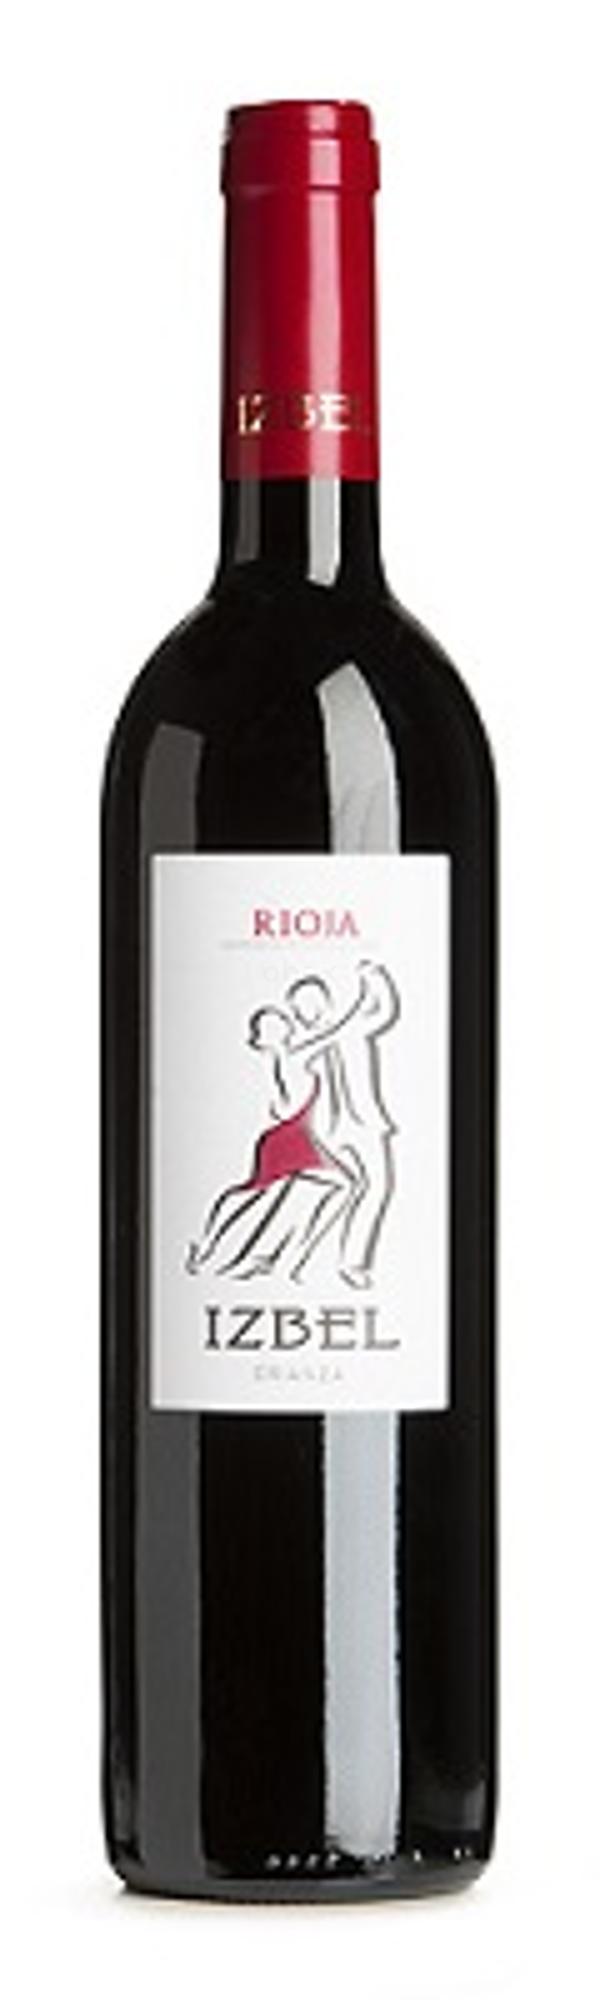 Produktfoto zu Rioja Crianza rot